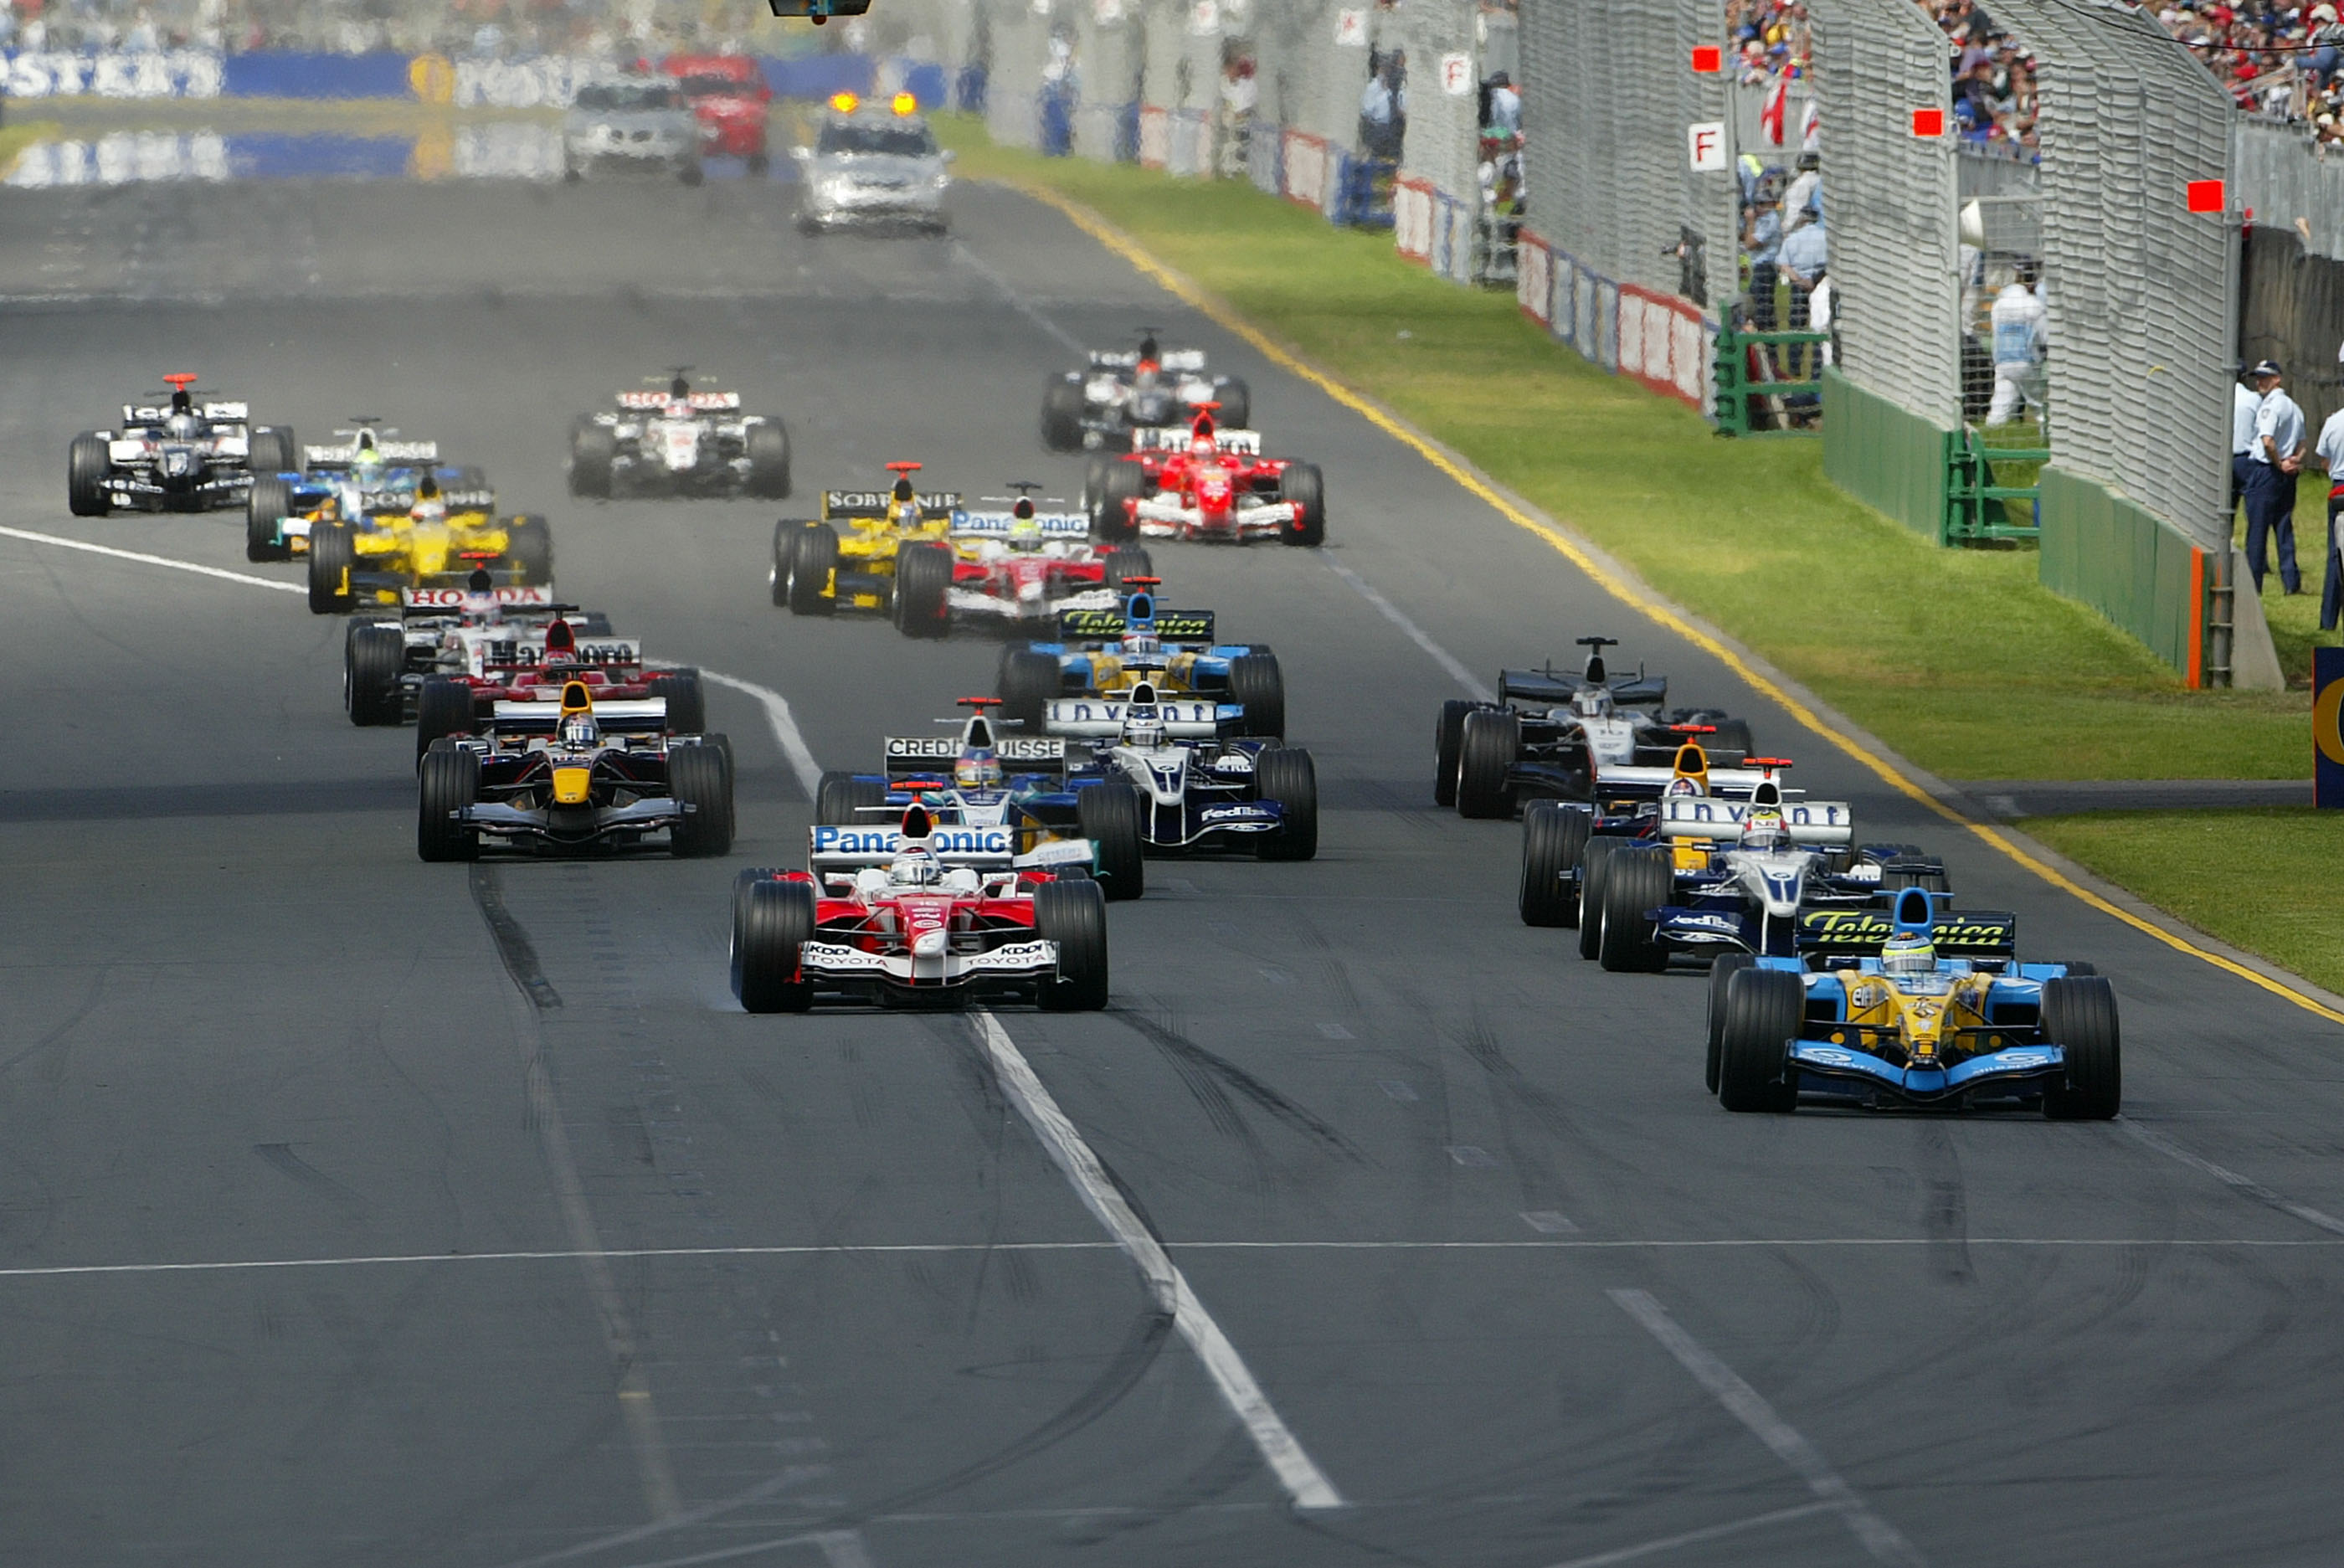 Australian Grand Prix 2005